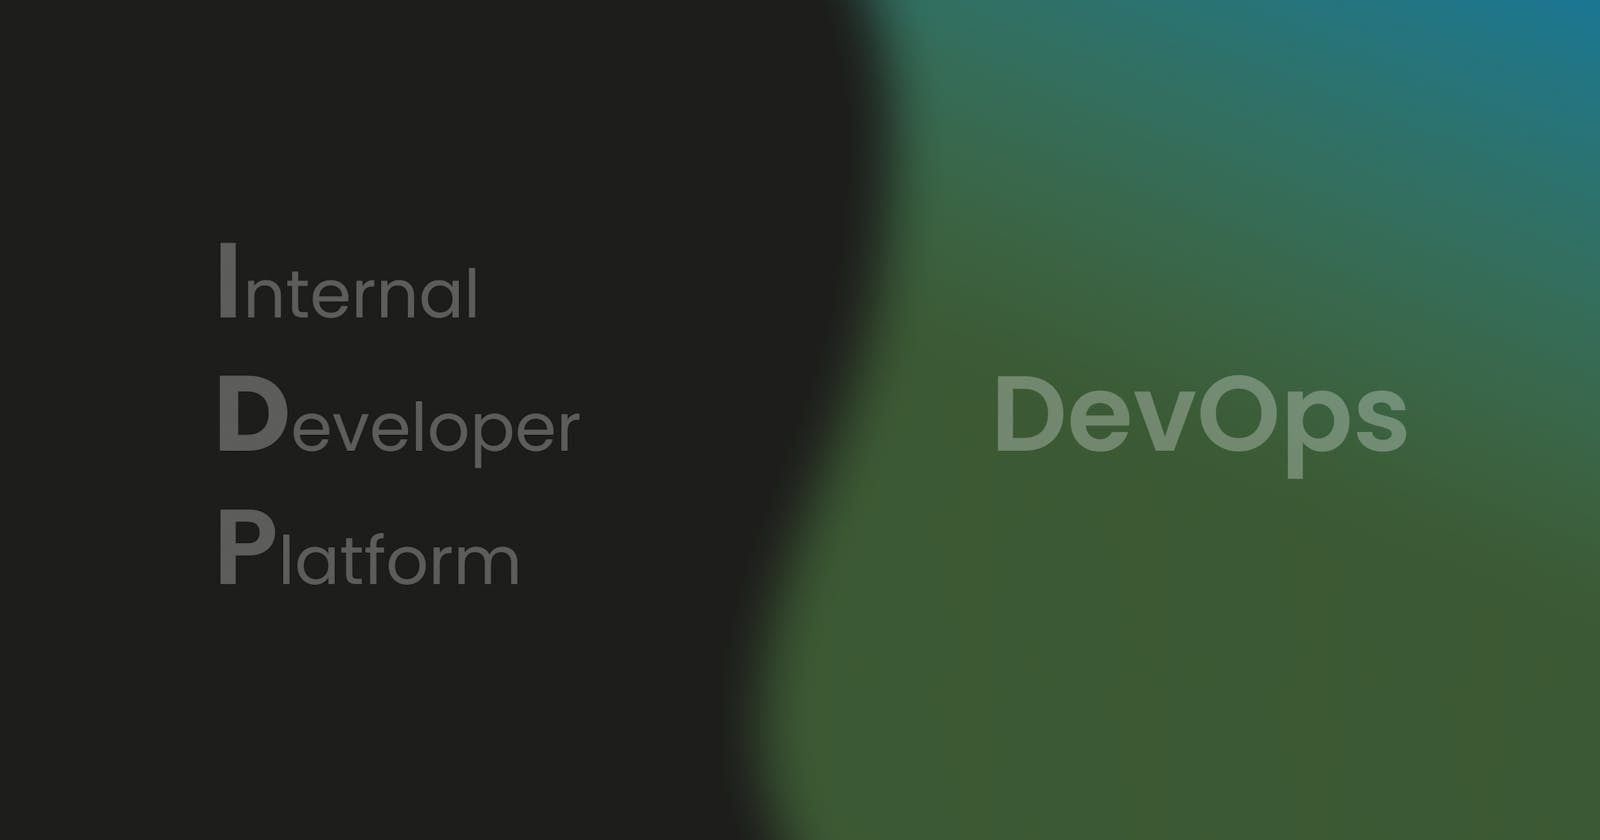 Internal Developer Platforms vs. Traditional DevOps Strategies